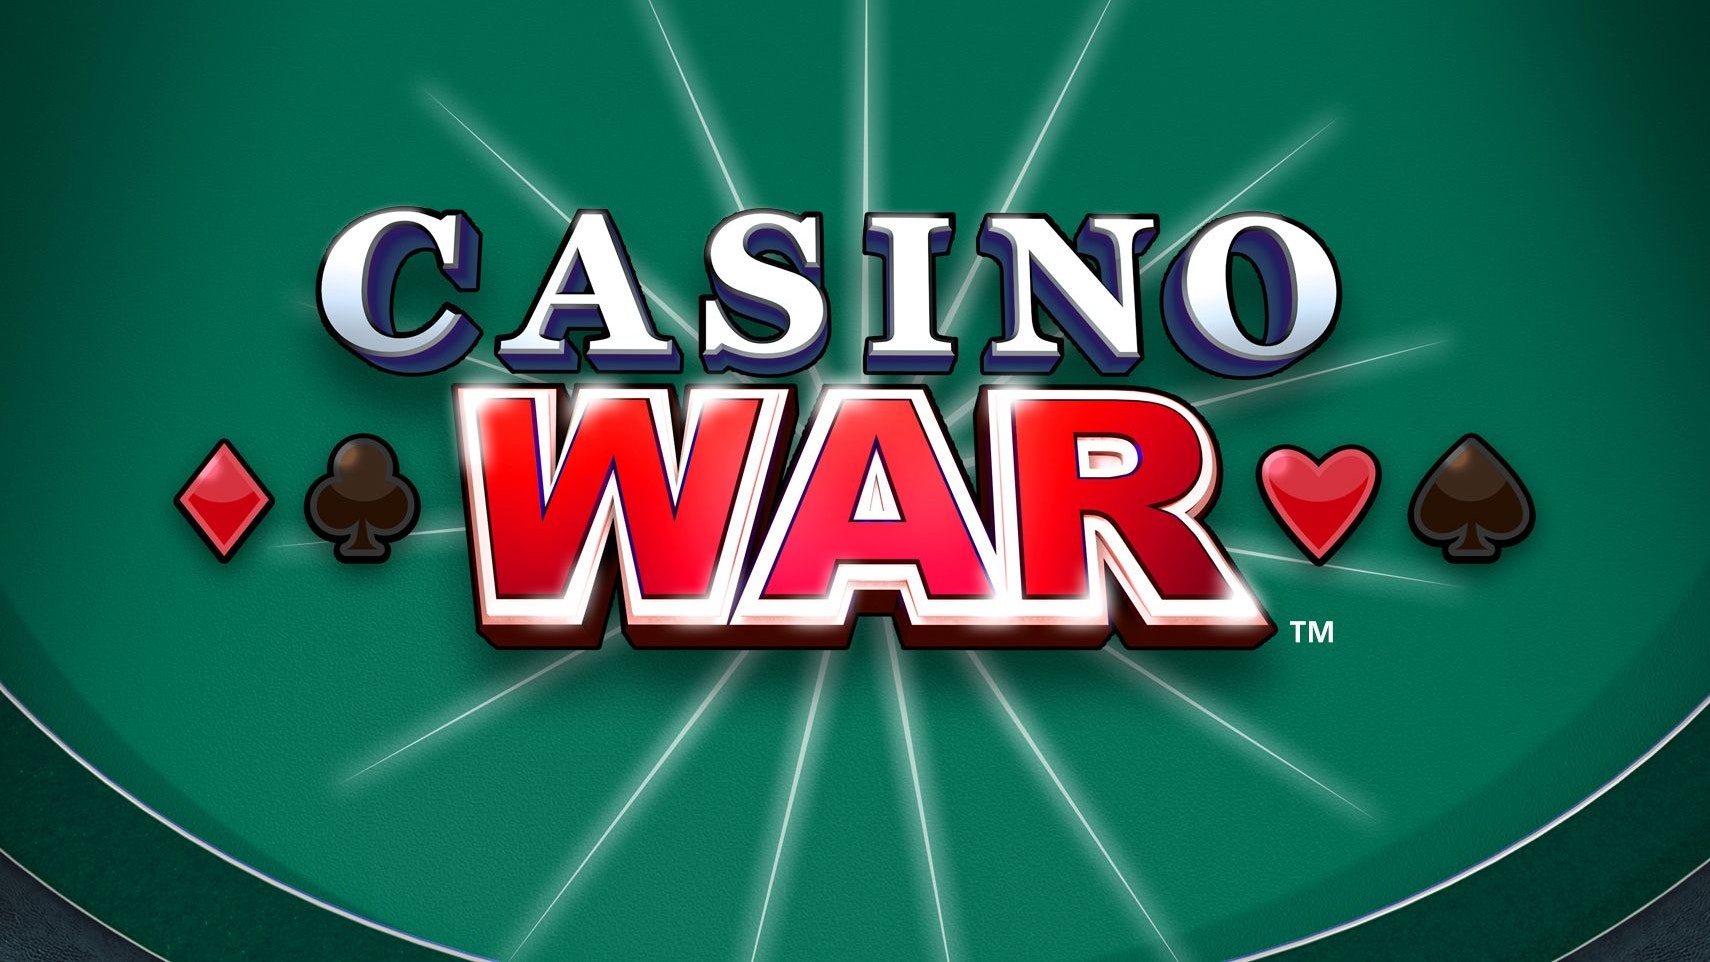 Casino War: From the Battlefield to the Casino Floor